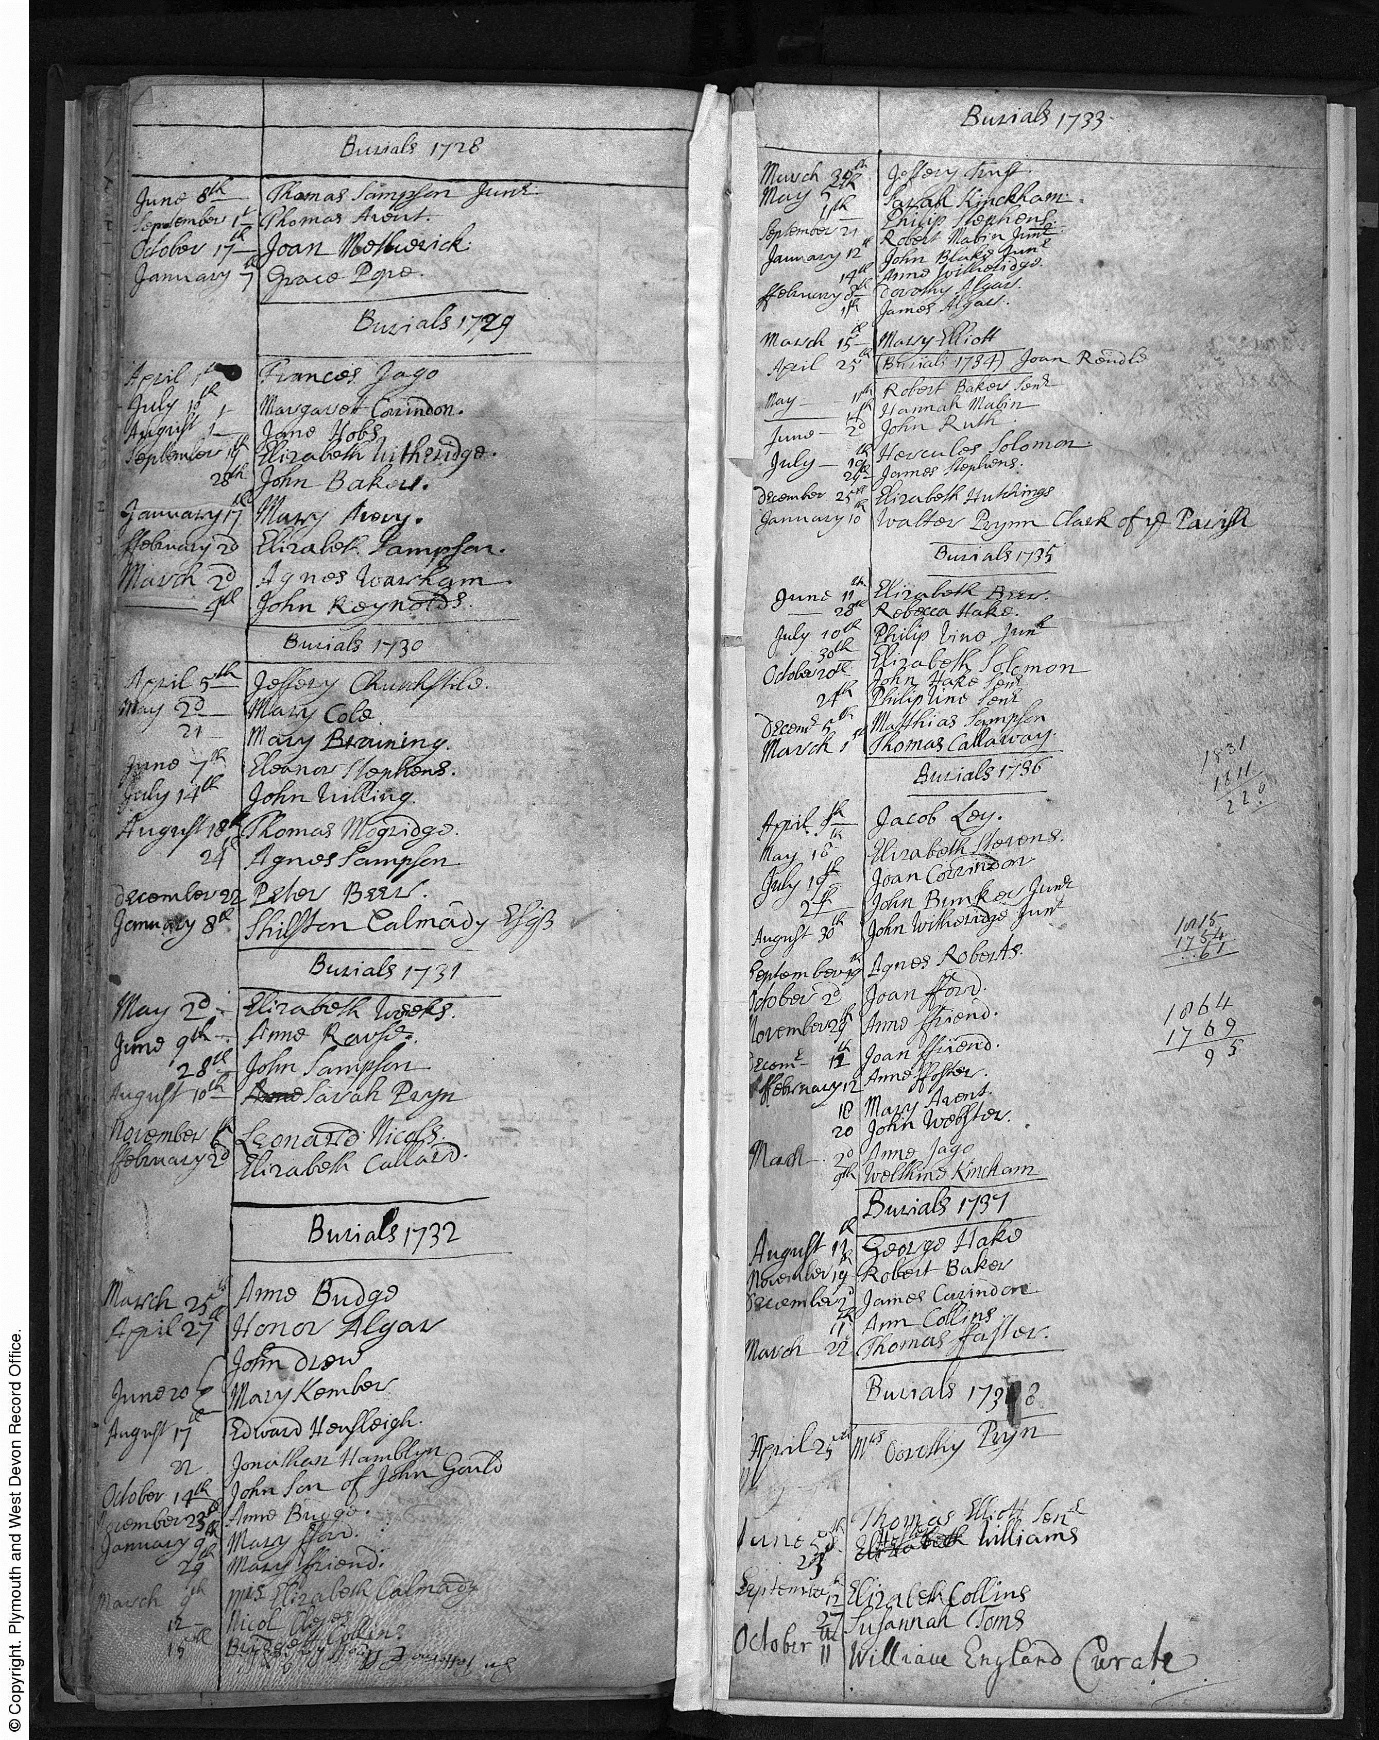 C:\Users\Virginia Rundle\Documents\Ancestry\Northey Moar Files\Hake\Death of Rebecca Hake nee Finch Jun 28 1735 and John Hake Snr 20 Oct 1735.jpg